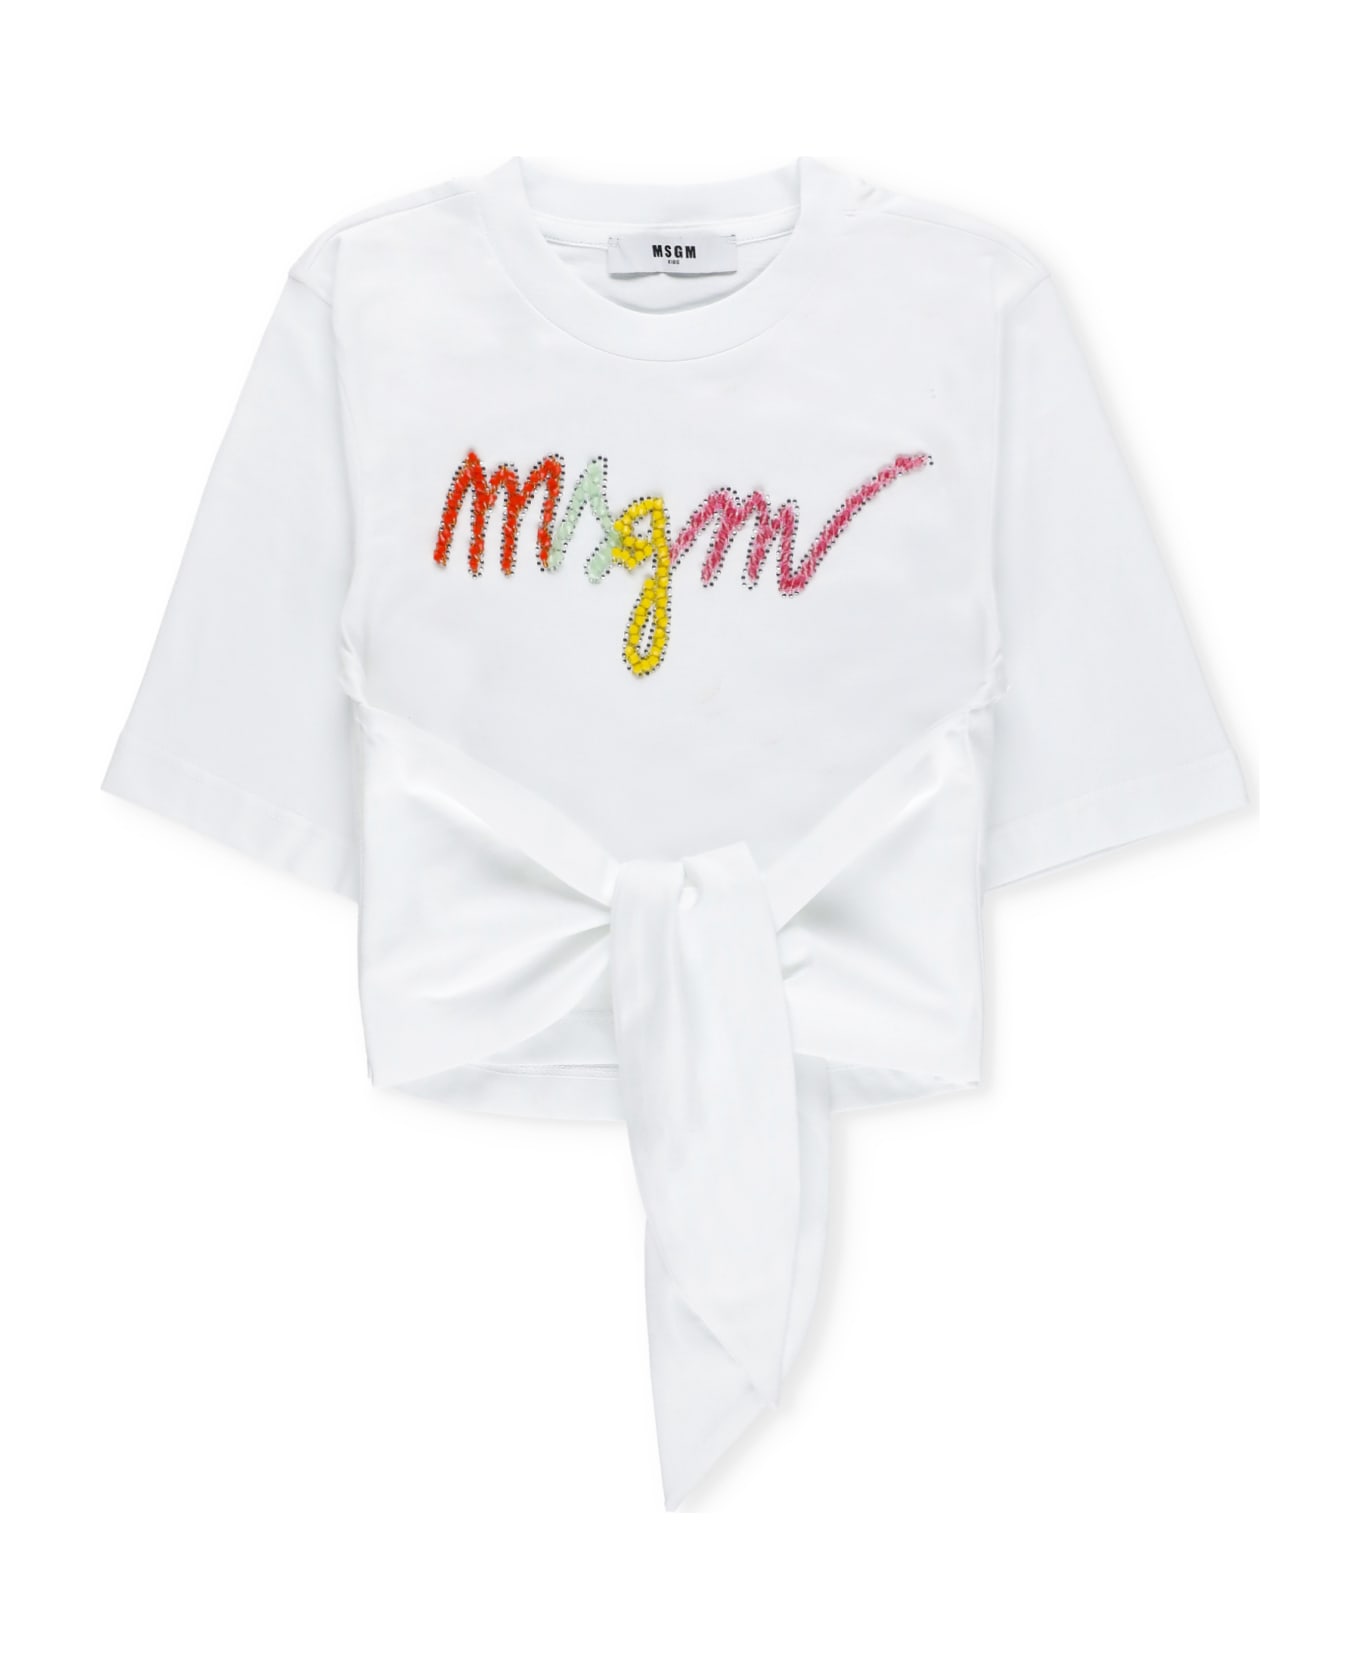 MSGM T-shirt With Logo - White